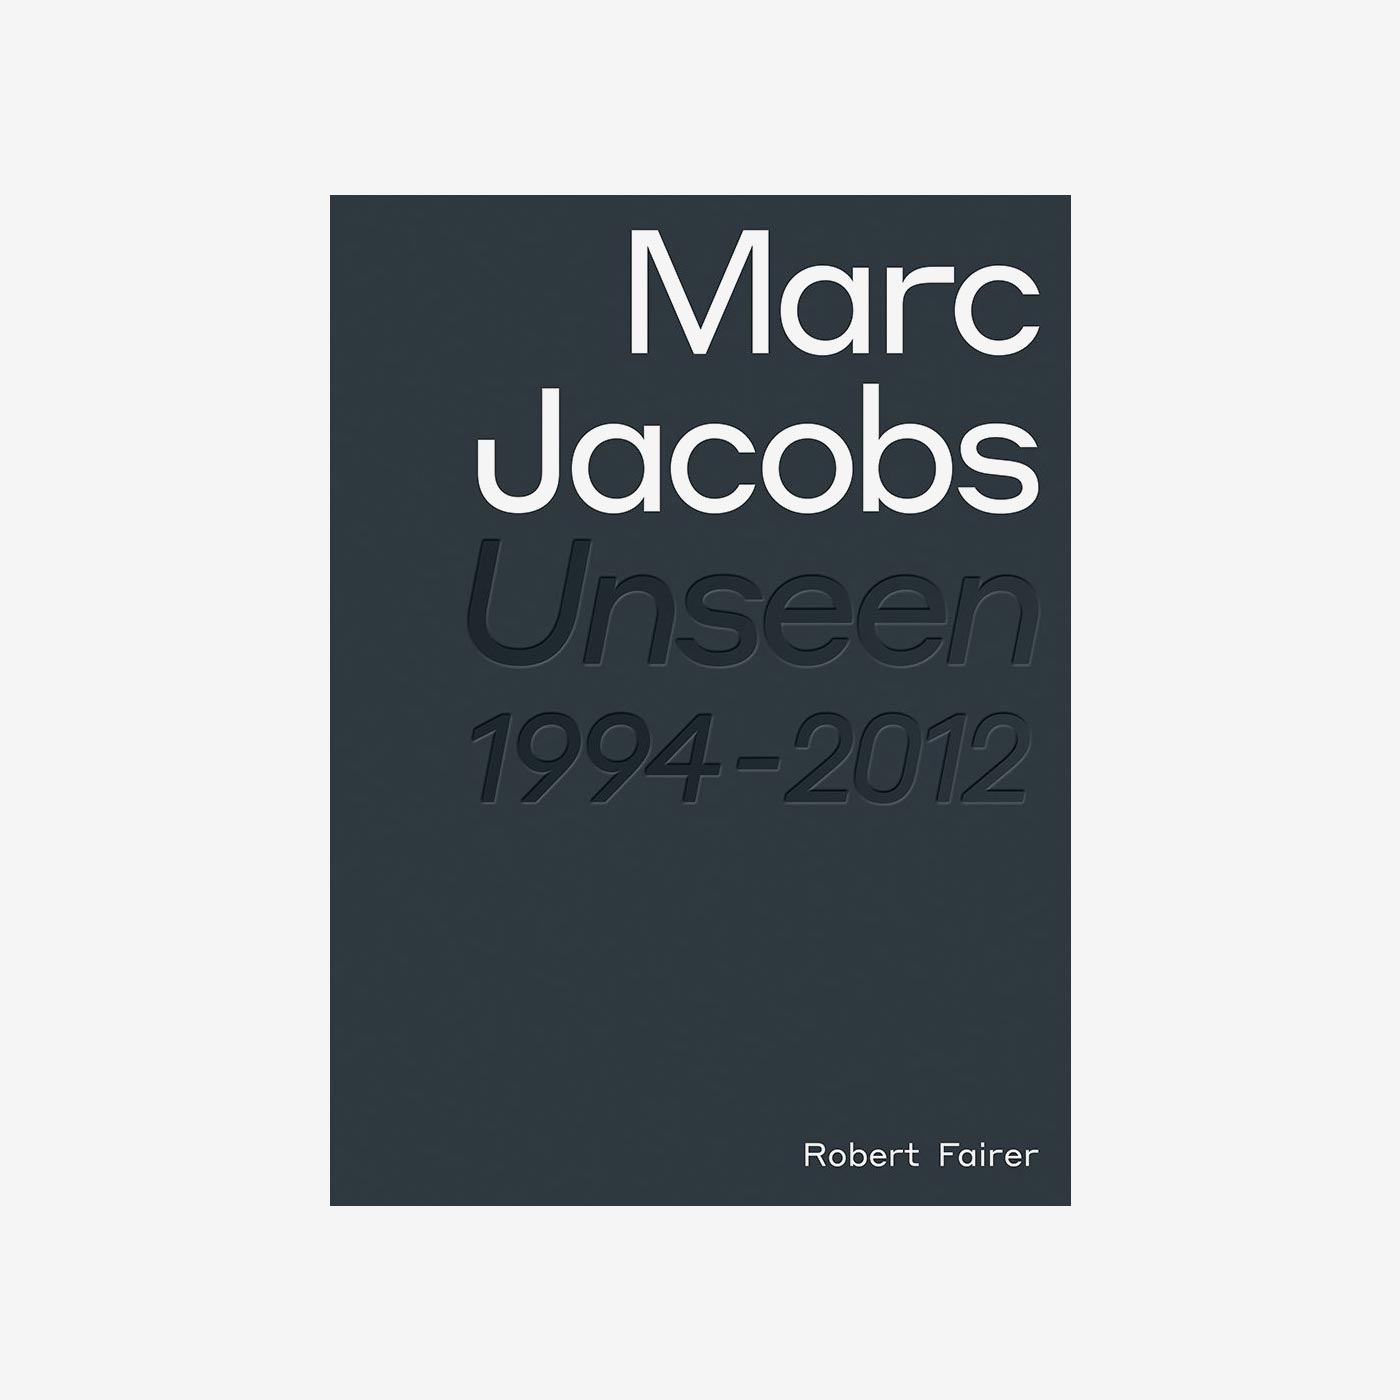 Marc Jacobs: Unseen 1994 - 2012